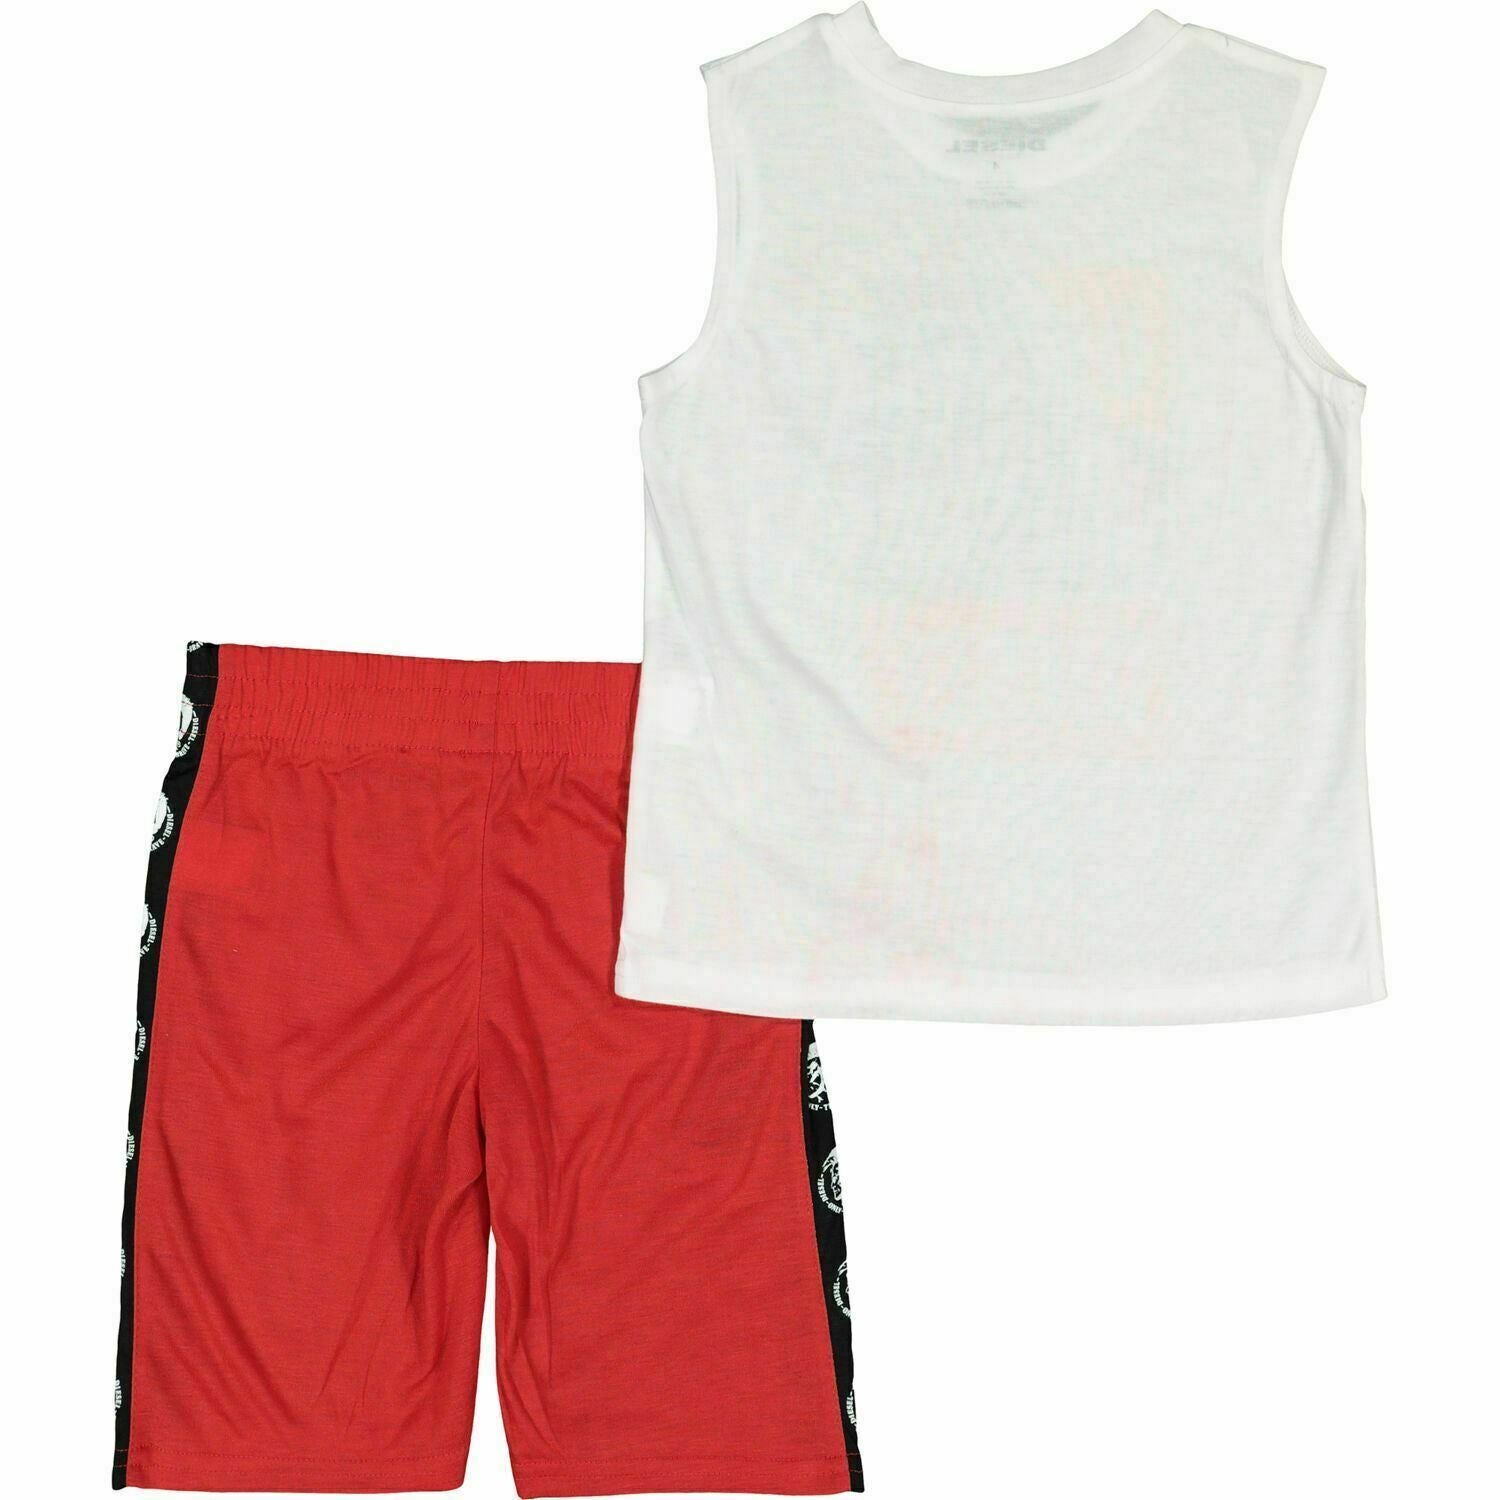 DIESEL Boys' Kids' 2-pc Pyjama Set: Vest Top & Shorts, White & Red, size 7 years